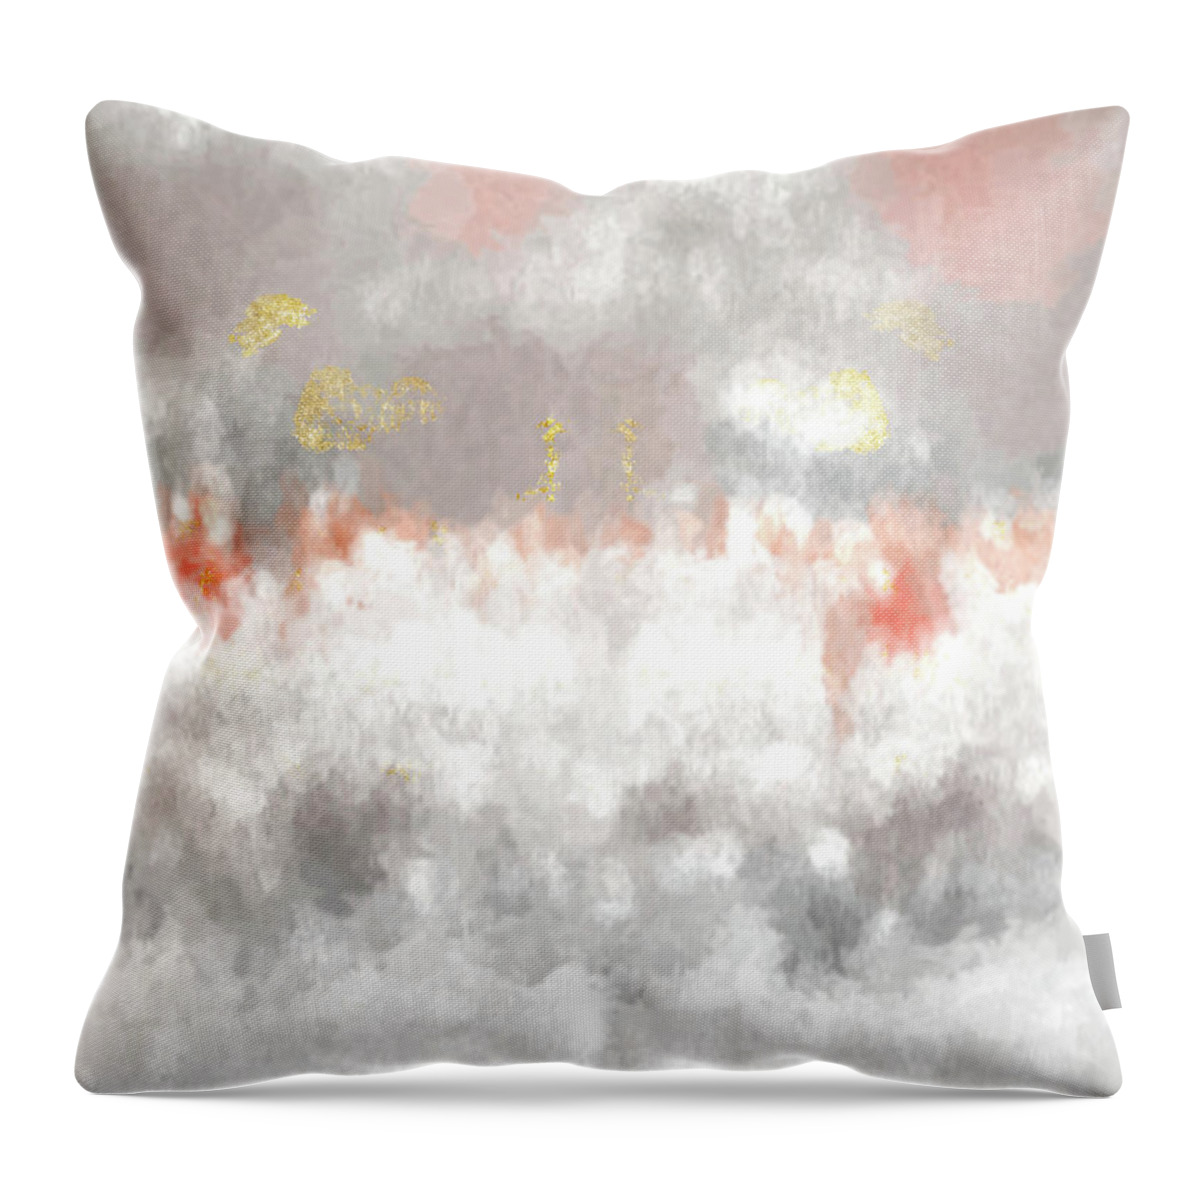 Fog Throw Pillow featuring the digital art Foggy Night by Alison Frank